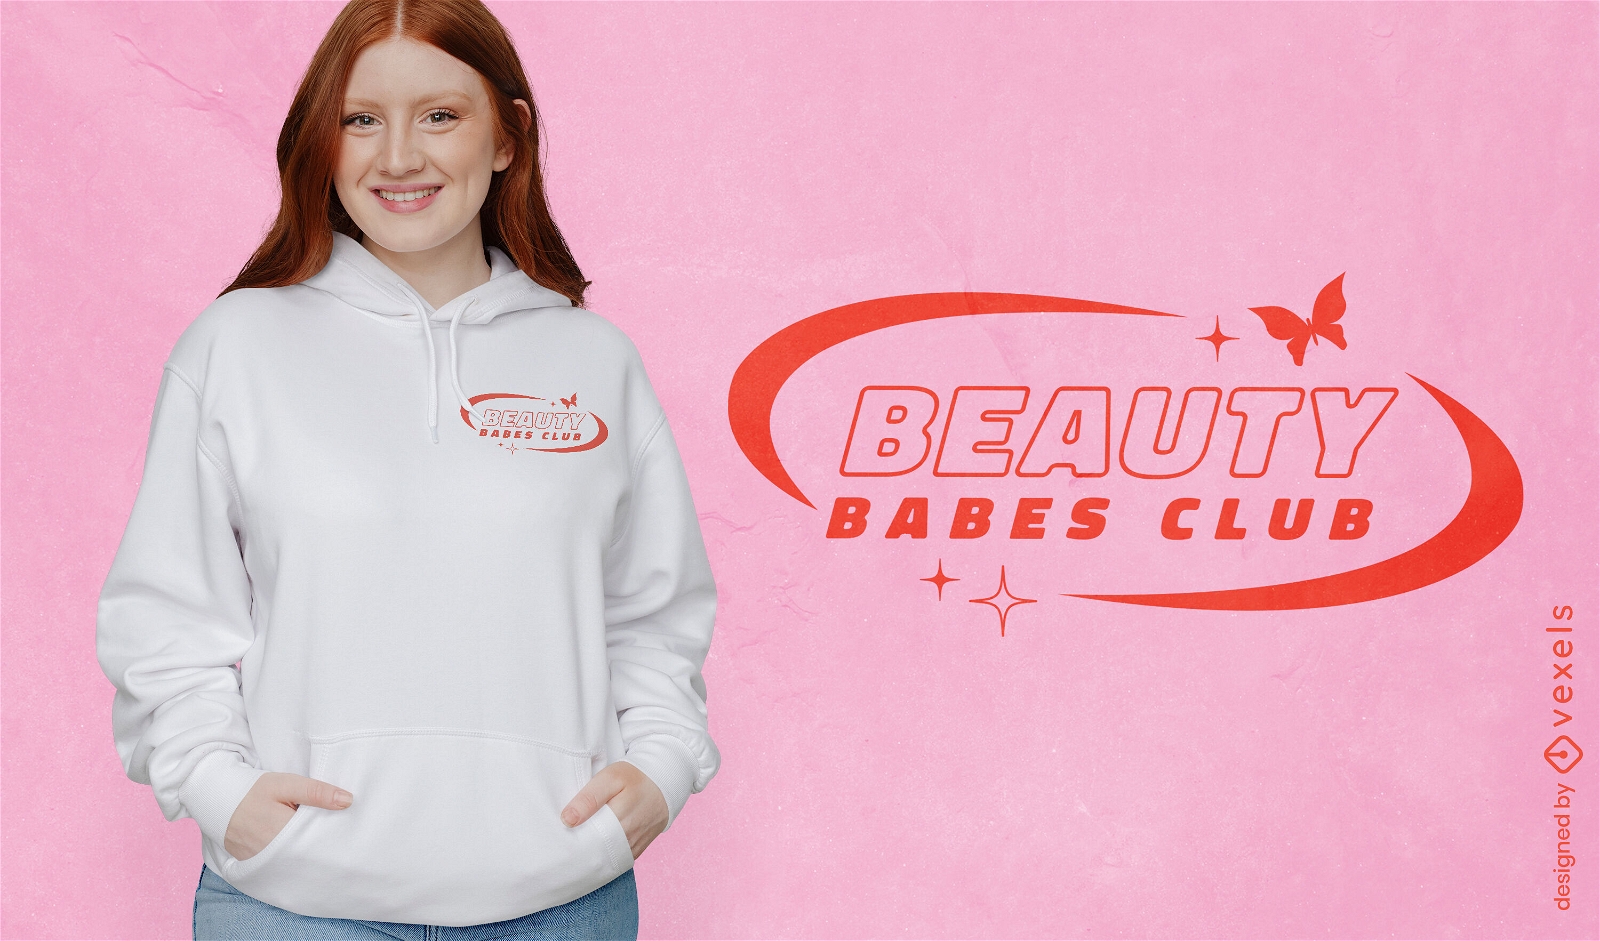 Beauty babes club 2000s t-shirt design